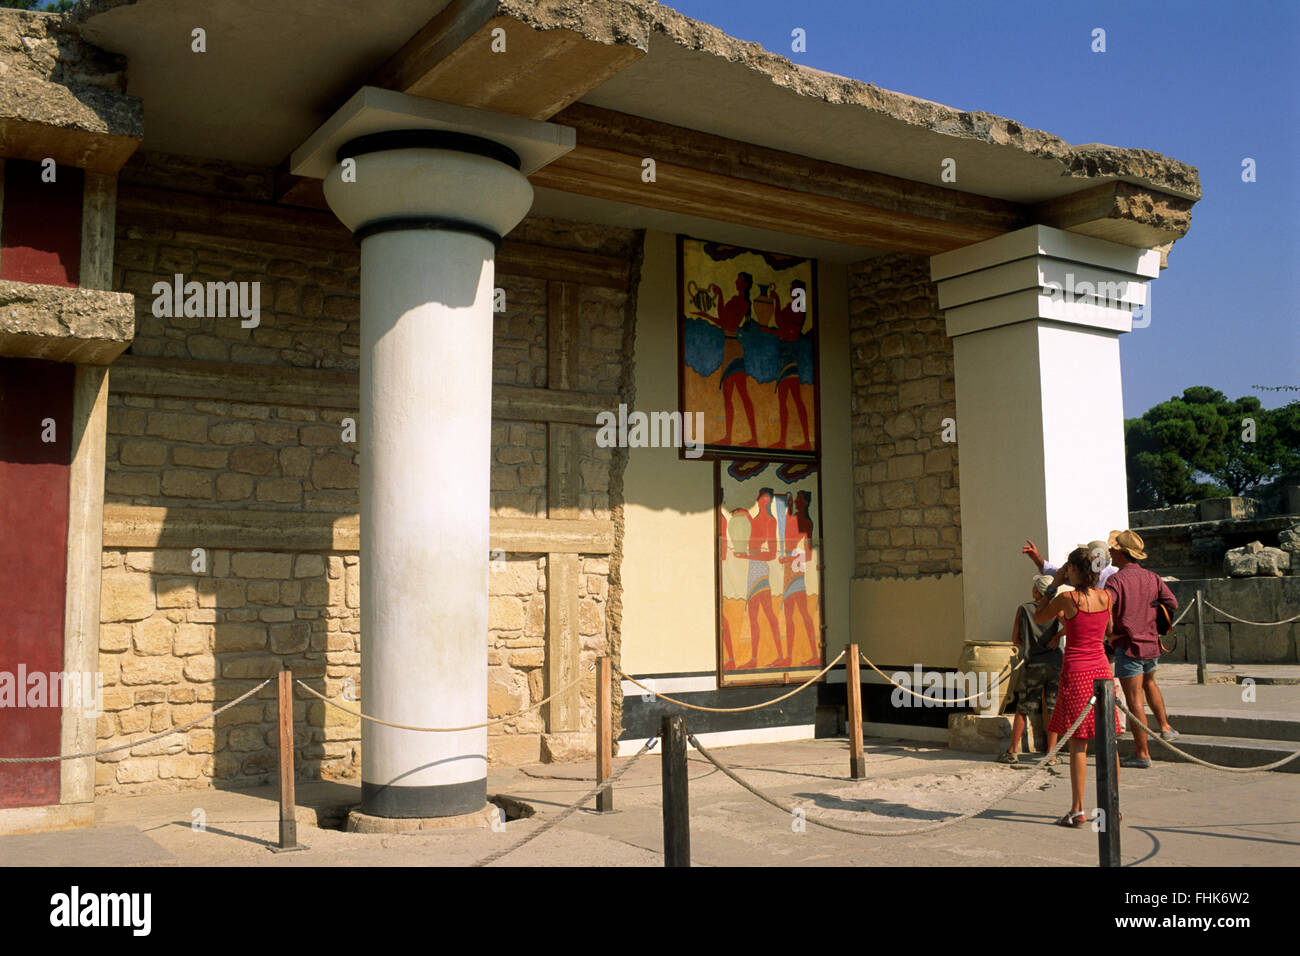 Greece, Crete, Knossos, Minoan Palace, South Propylaeum, Procession Fresco paintings Stock Photo